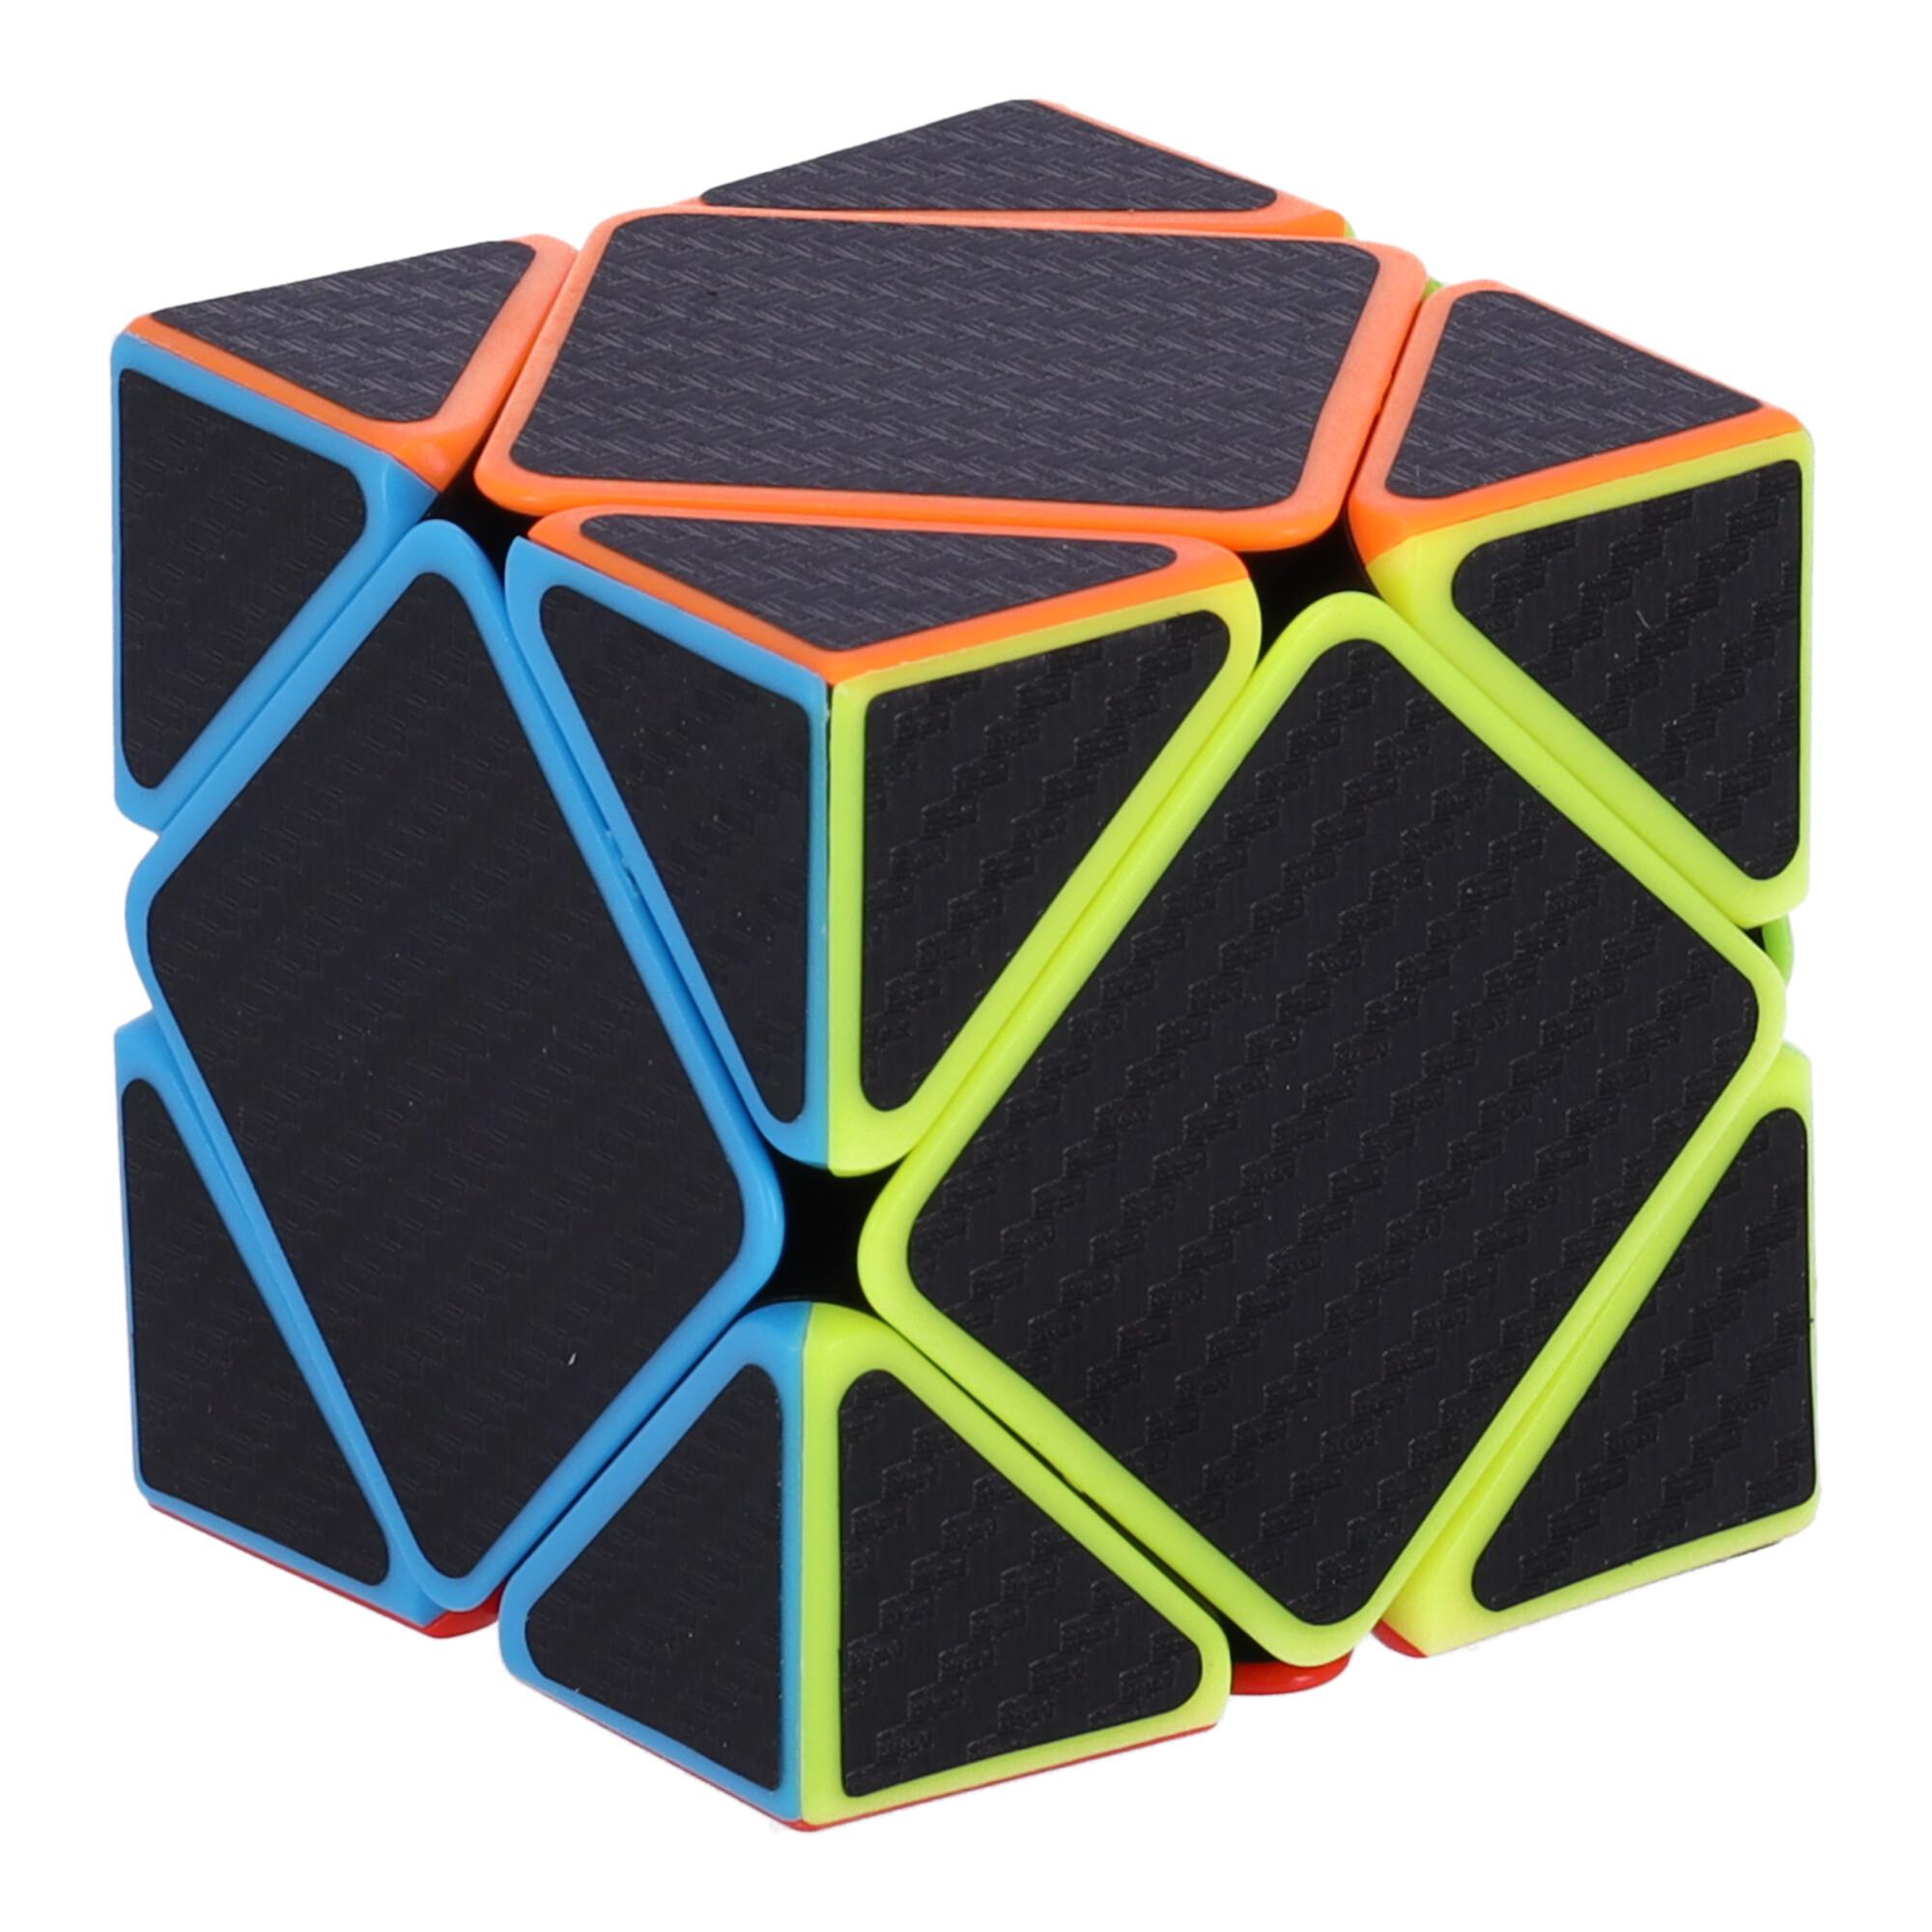 Modern jigsaw puzzle, logic cube, Rubik's Cube - Skewb, type I